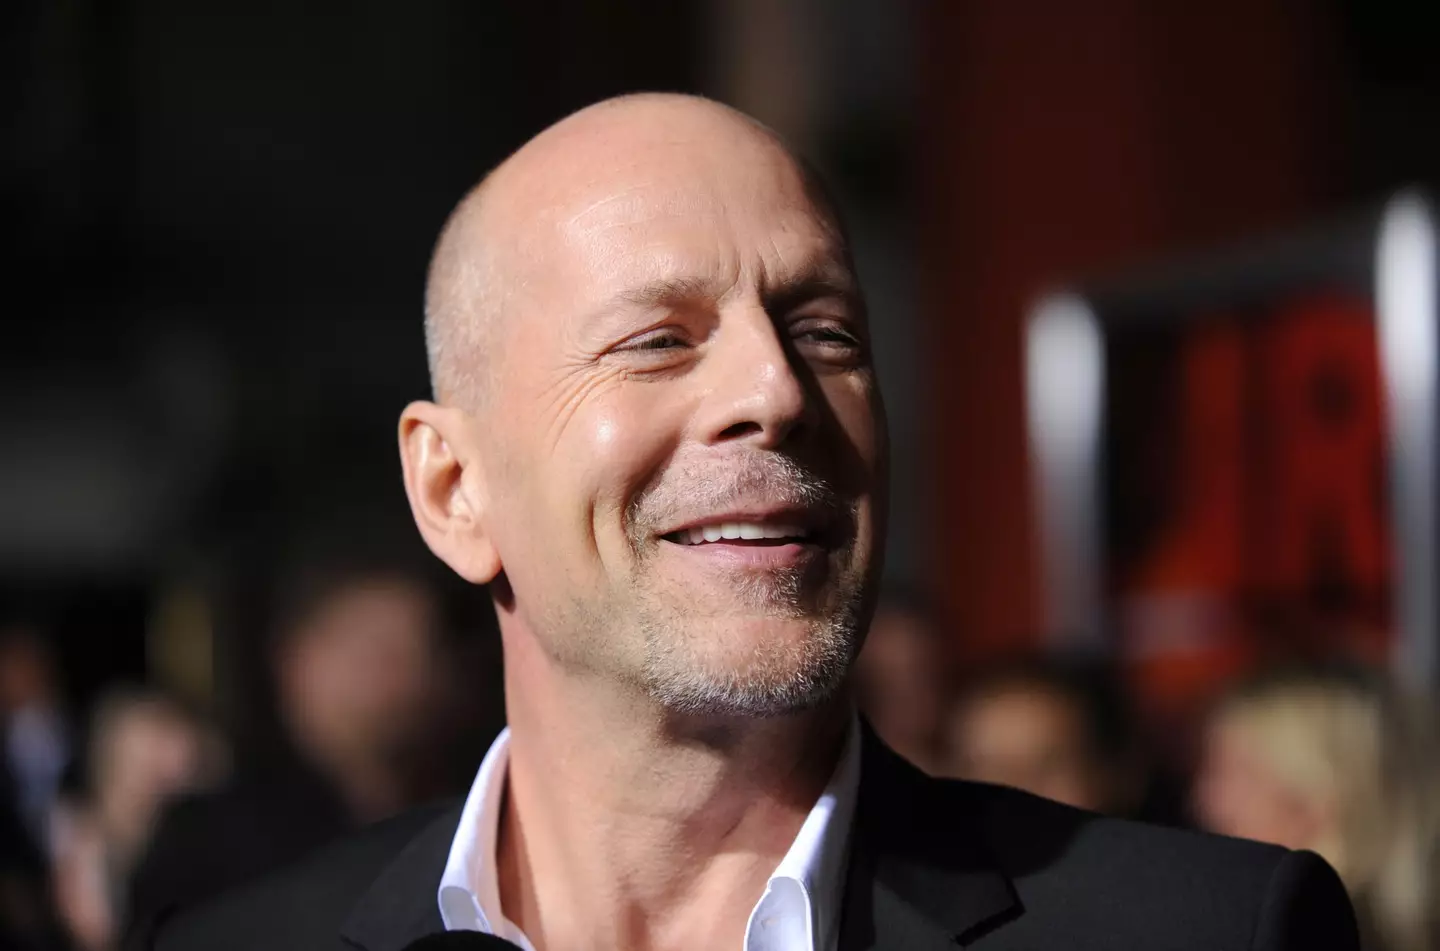 Bruce Willis' likeness has not been sold despite earlier reports.